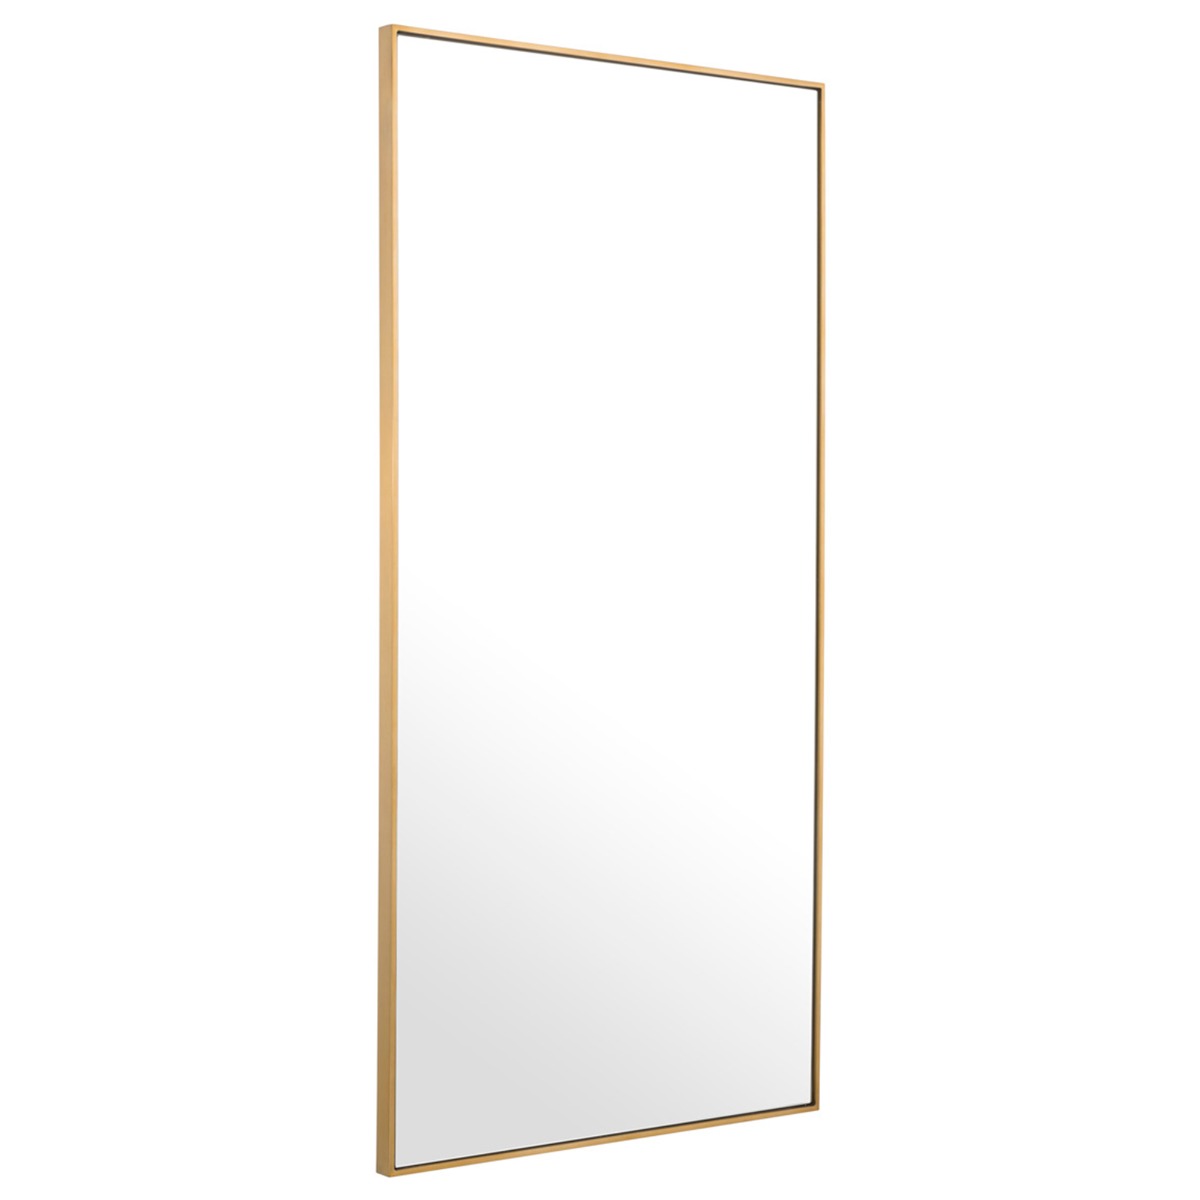 Eichholtz Redondo Mirror Brushed Brass Finish 90x180cm, Square, Gold | Barker & Stonehouse